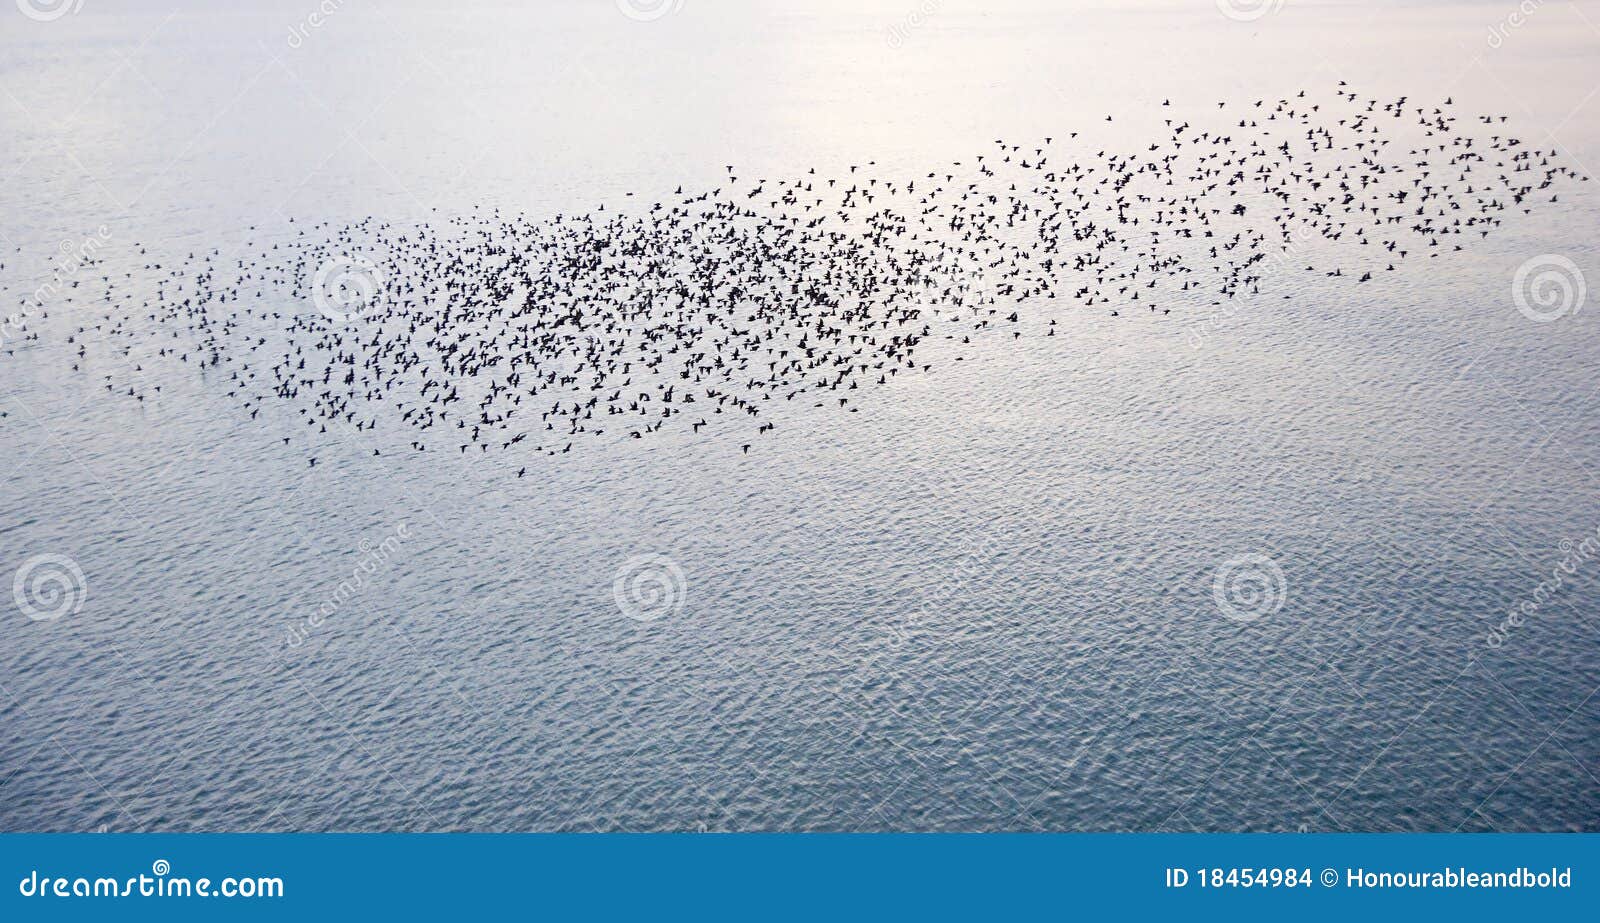 natural migration of european starlings